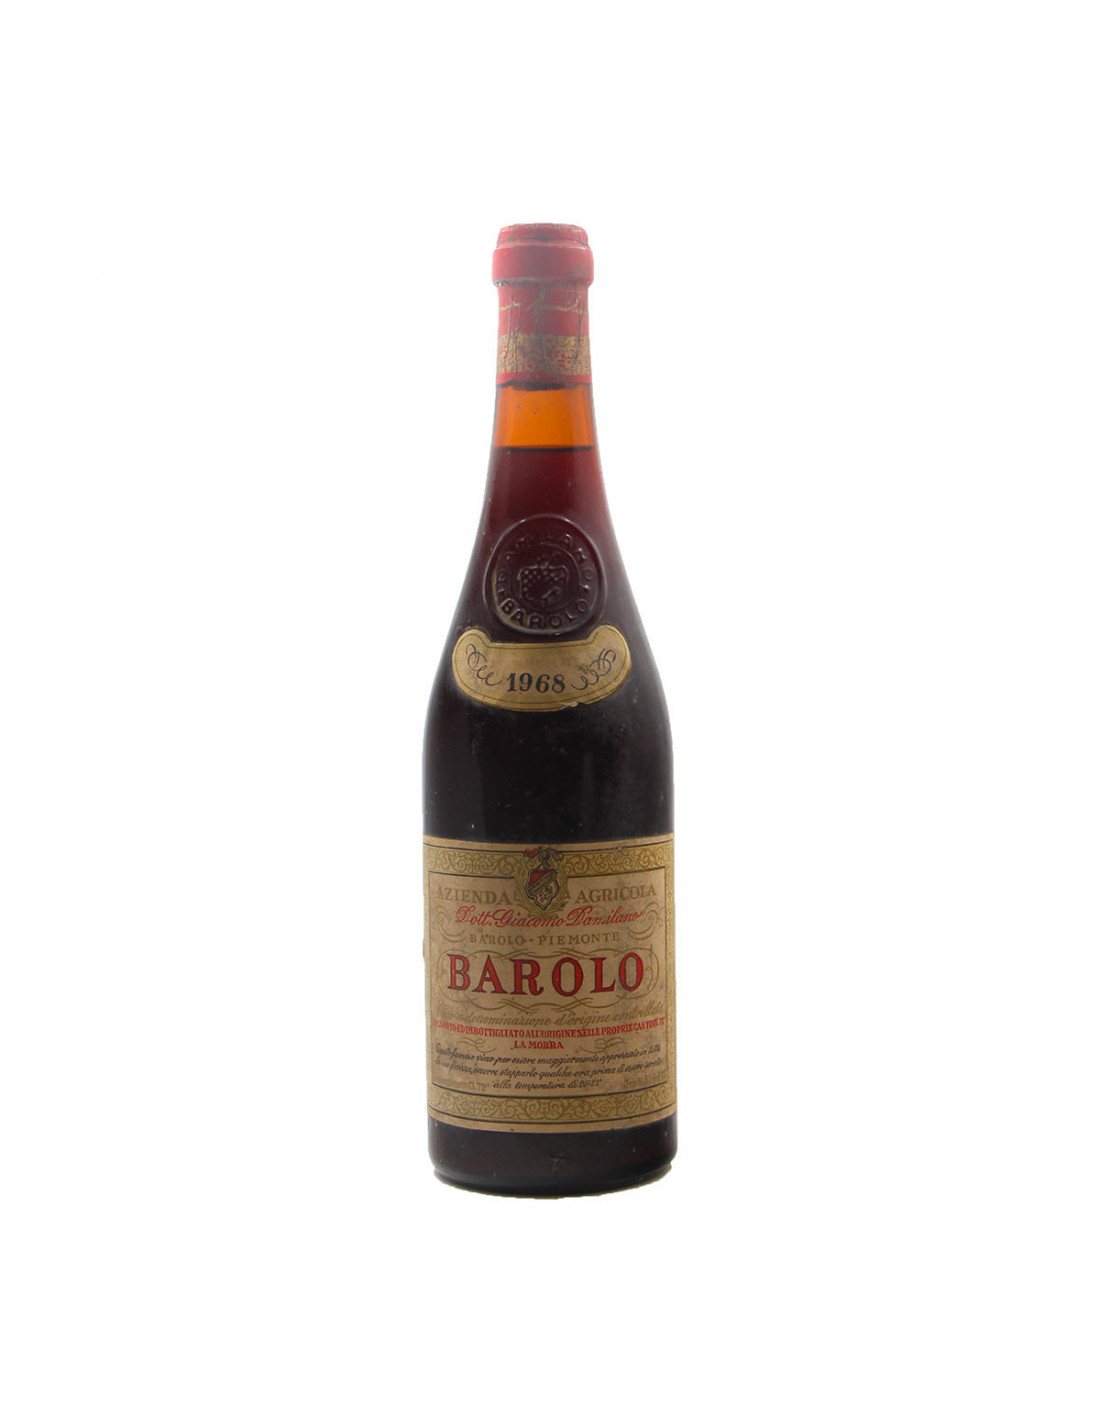 BAROLO 1968 DAMILANO Grandi Bottiglie